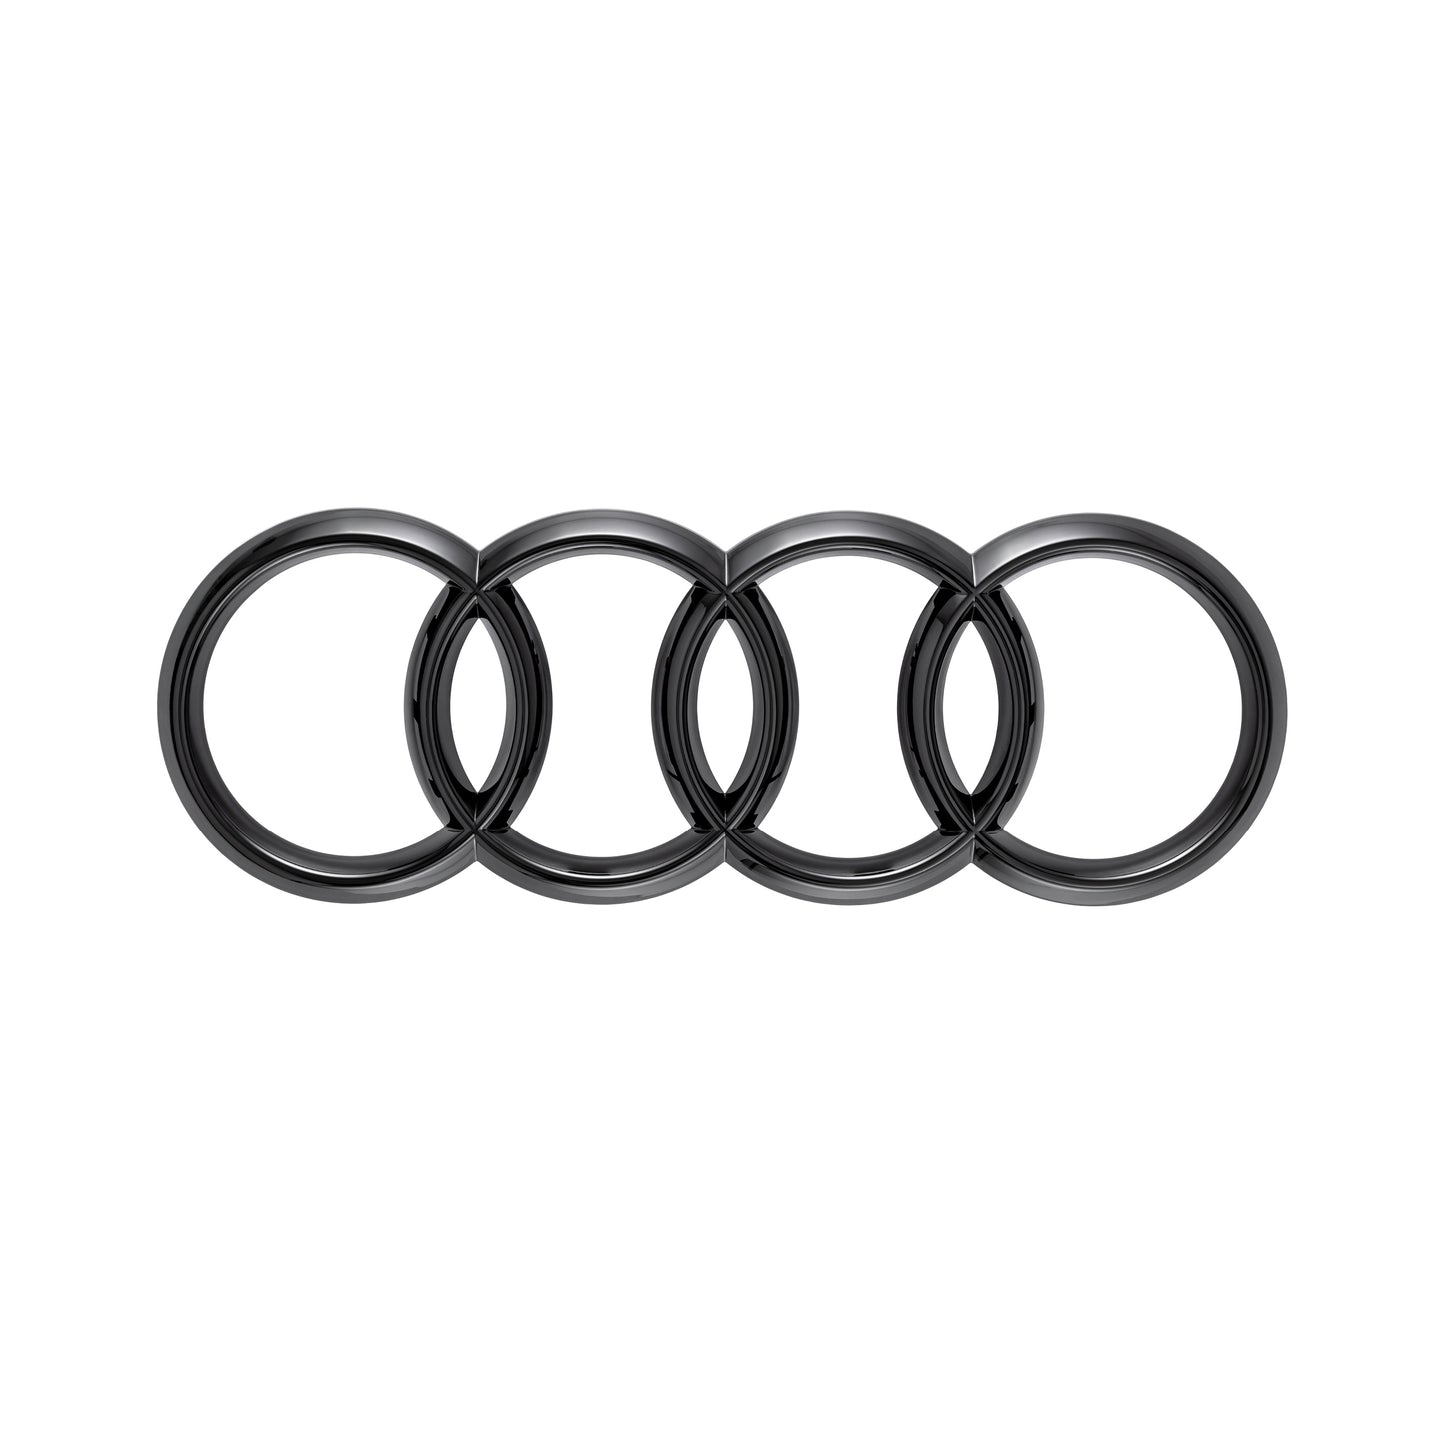 Audi rings, rear. Black, Q7